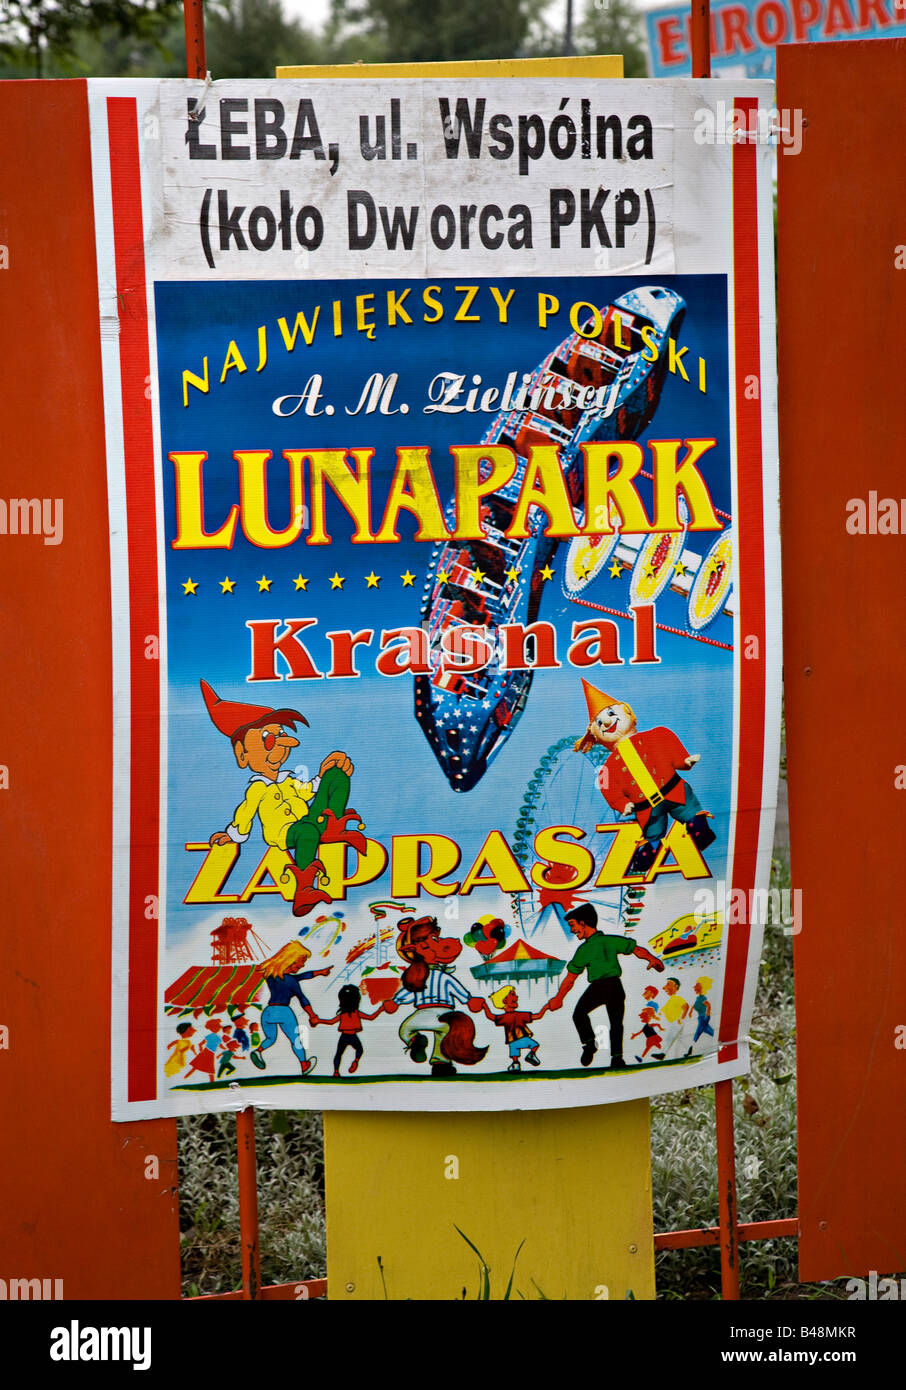 Poster for funfair Leba Poland Stock Photo